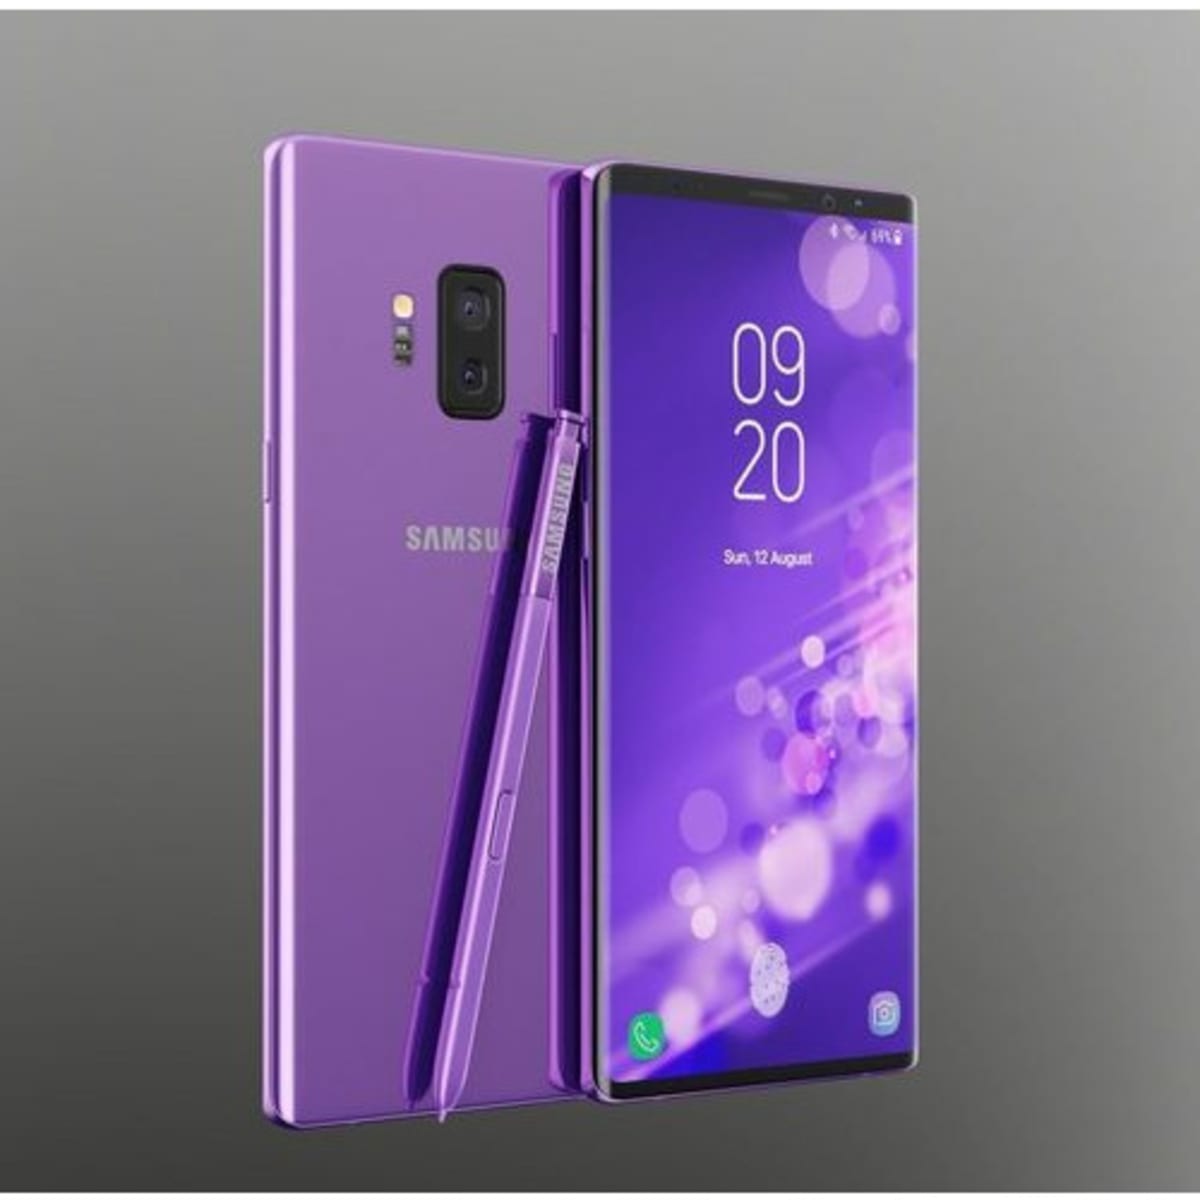 Note 9 plus. Samsung Galaxy Note 9. Samsung Galaxy s9 Note. Samsung Galaxy Note 9 Plus. Samsung Galaxy Note 9 Purple.